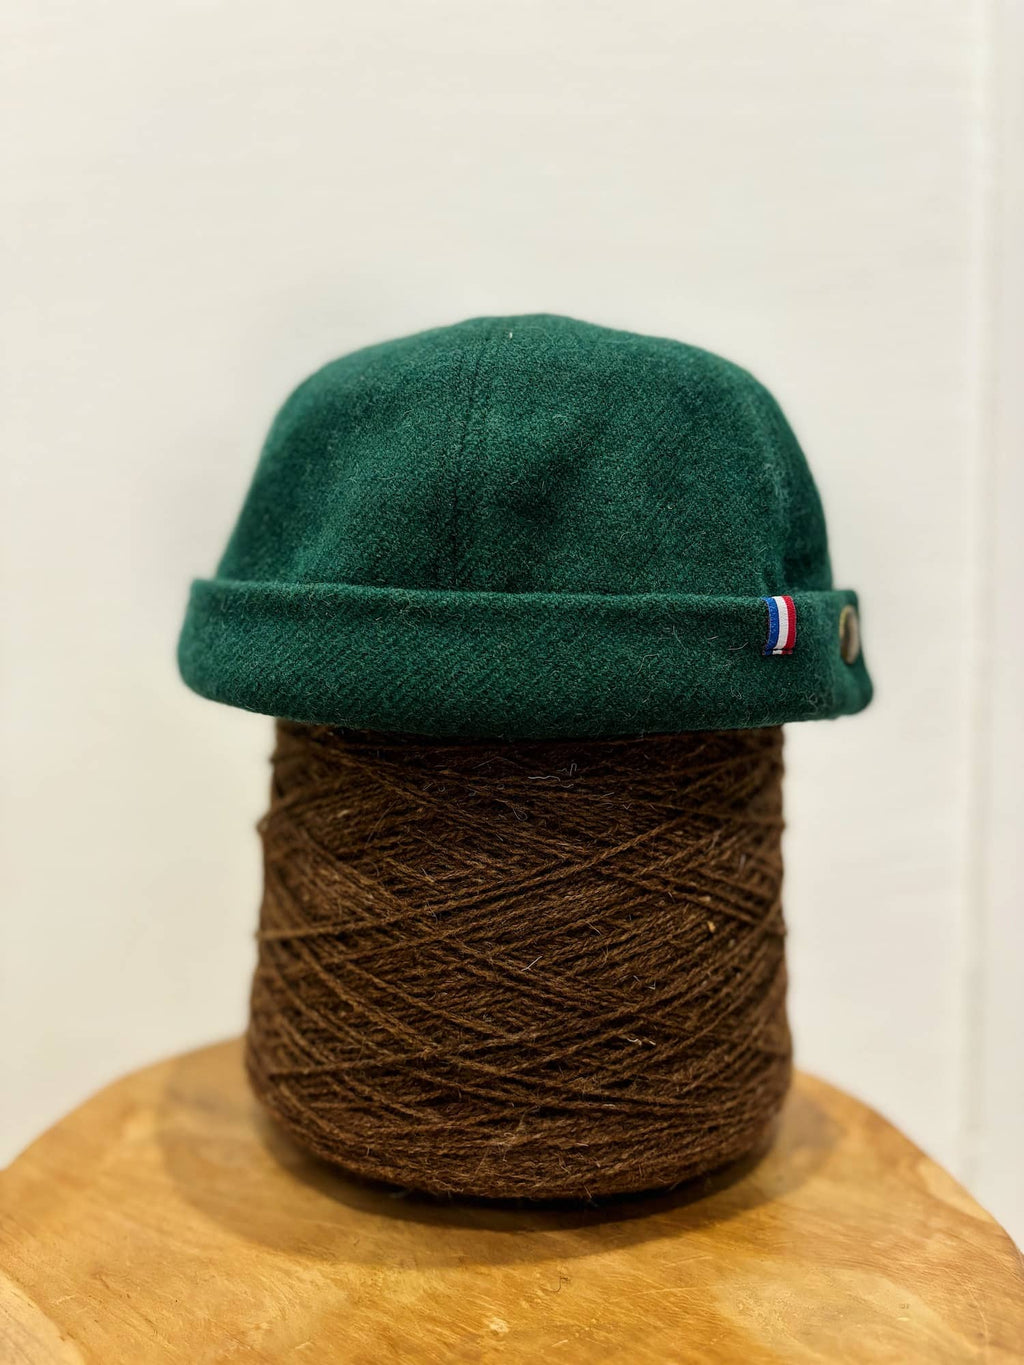  bonnet docker, mixte, upcyclé, laine recyclée, vert sapin, made in France, maison Izard